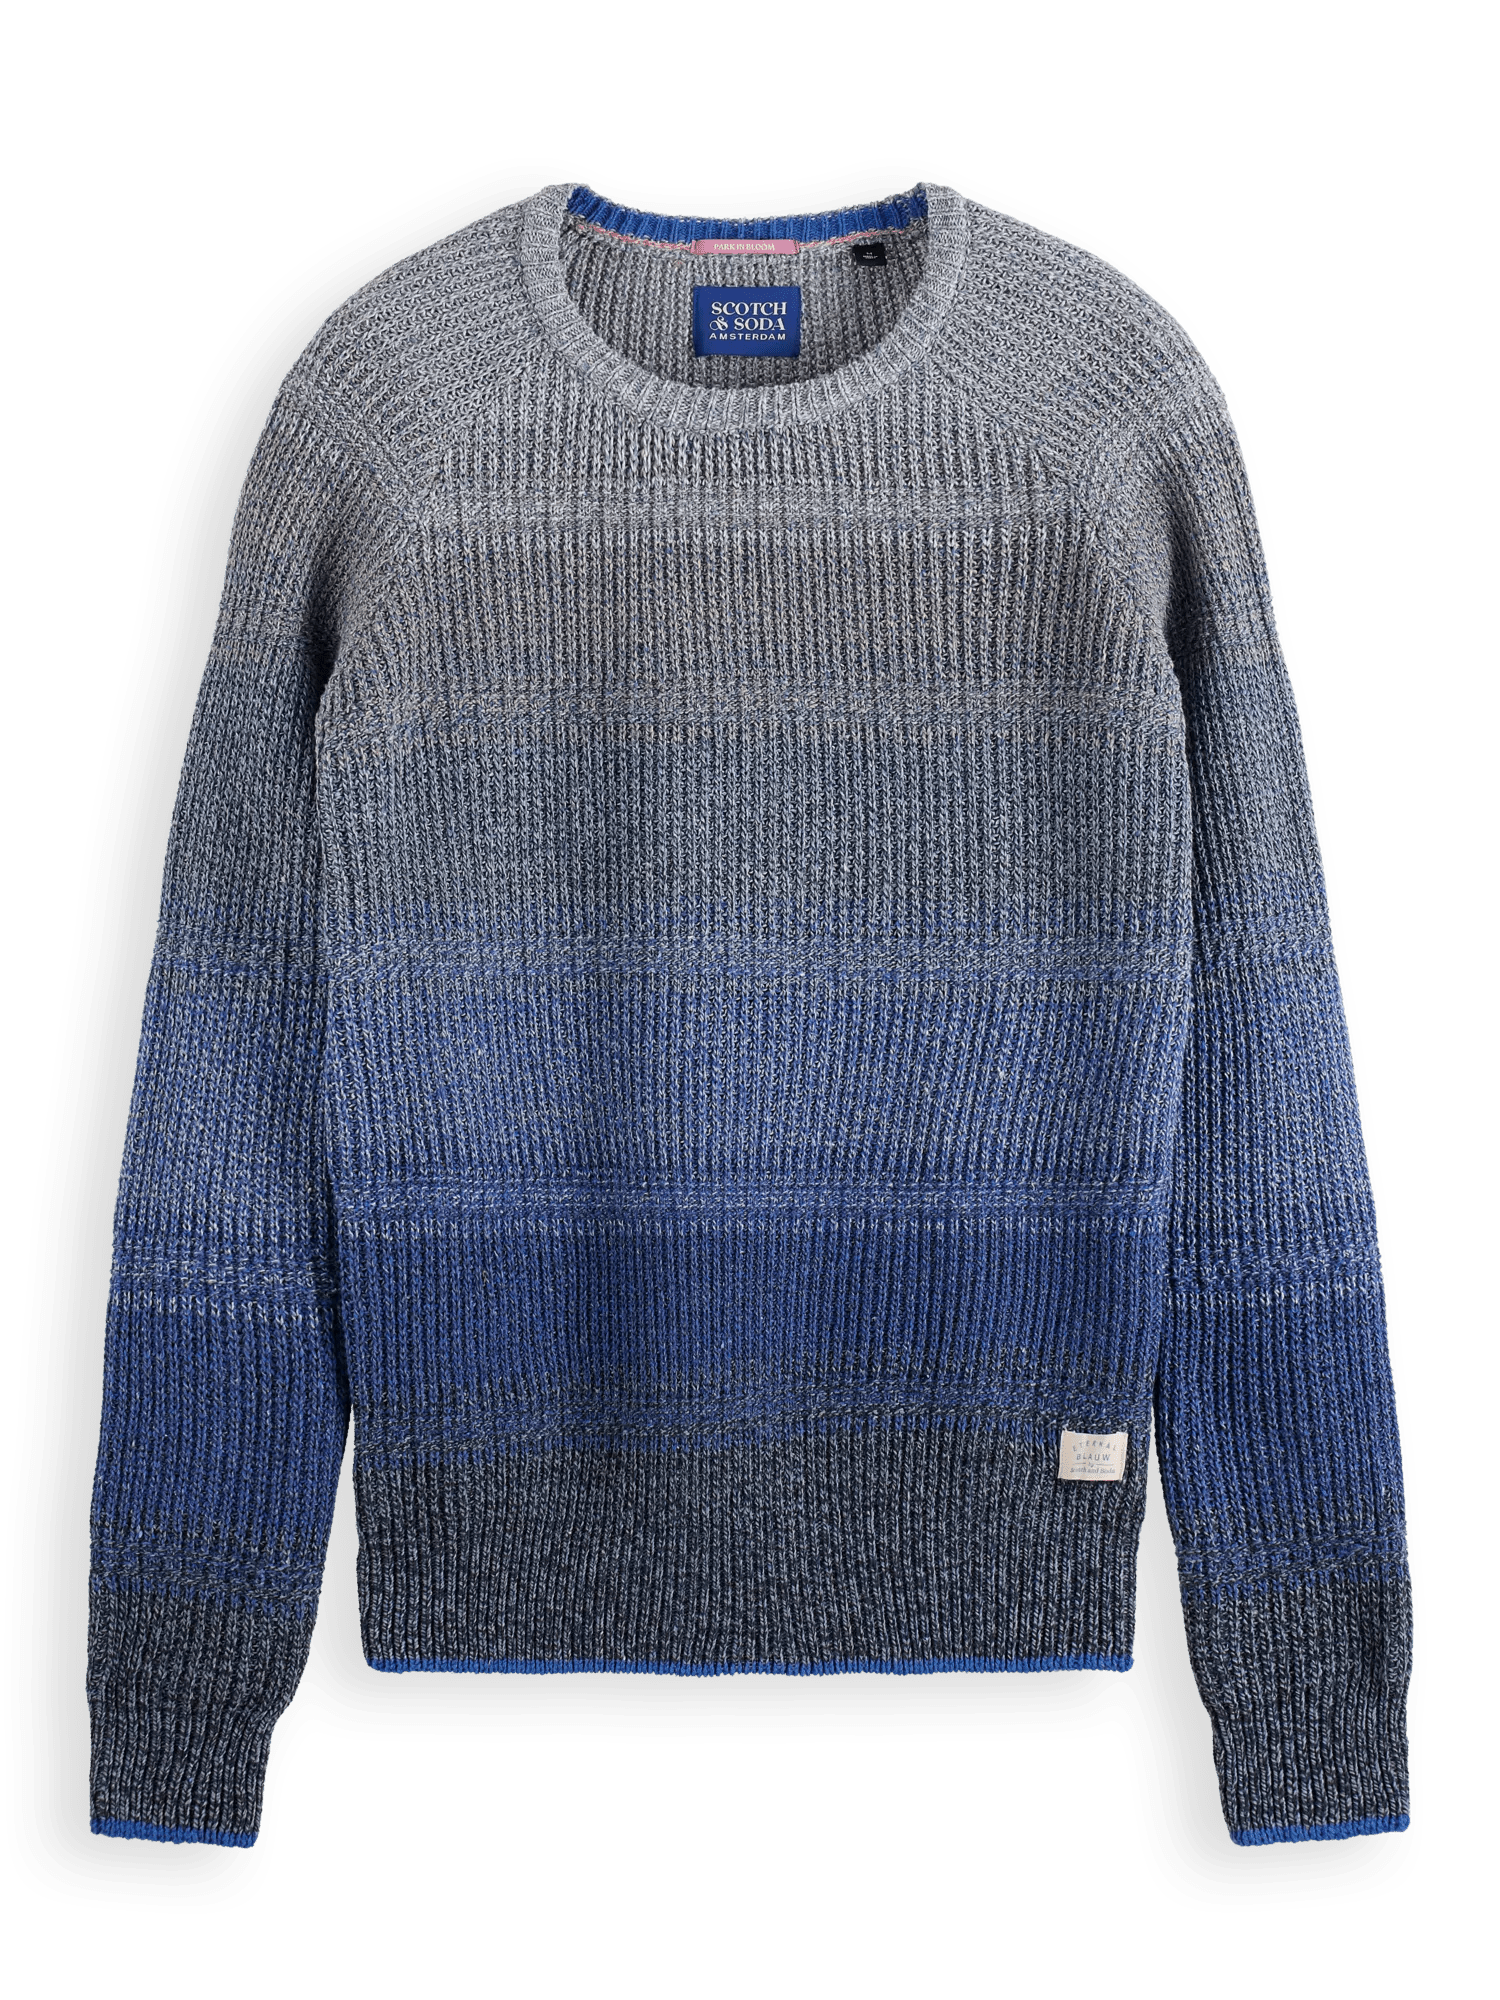 Scotch & Soda Eternal Blauw degrade knit in recycled denim FNT